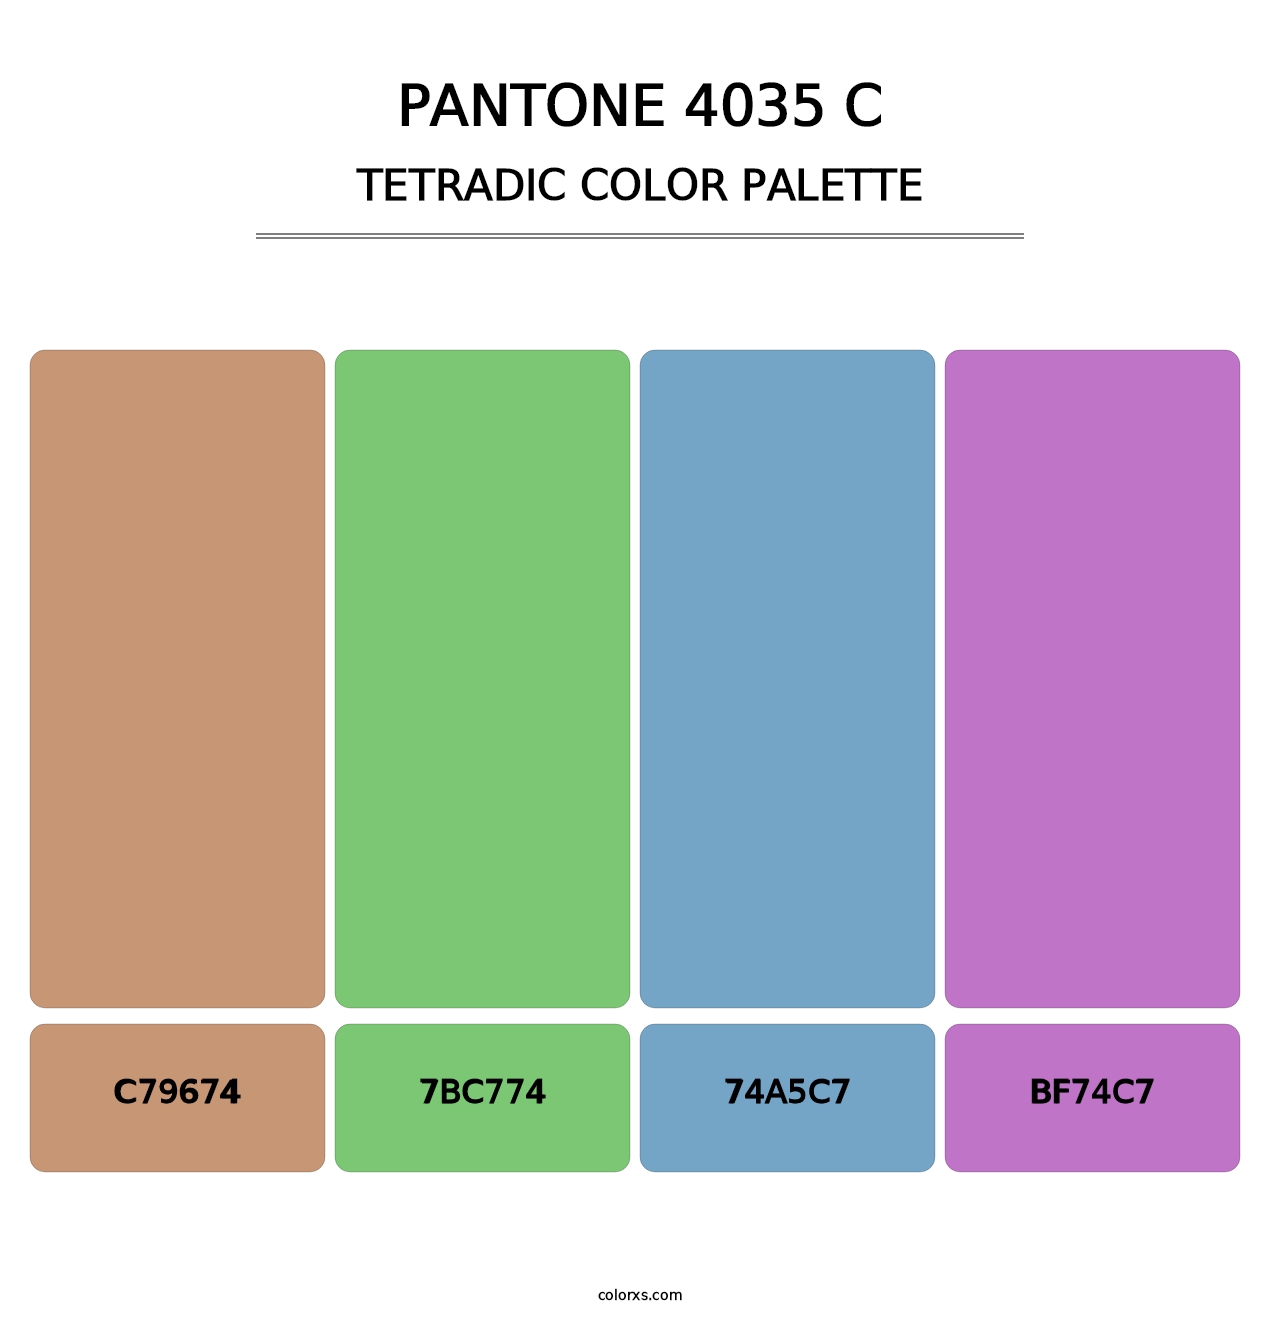 PANTONE 4035 C - Tetradic Color Palette